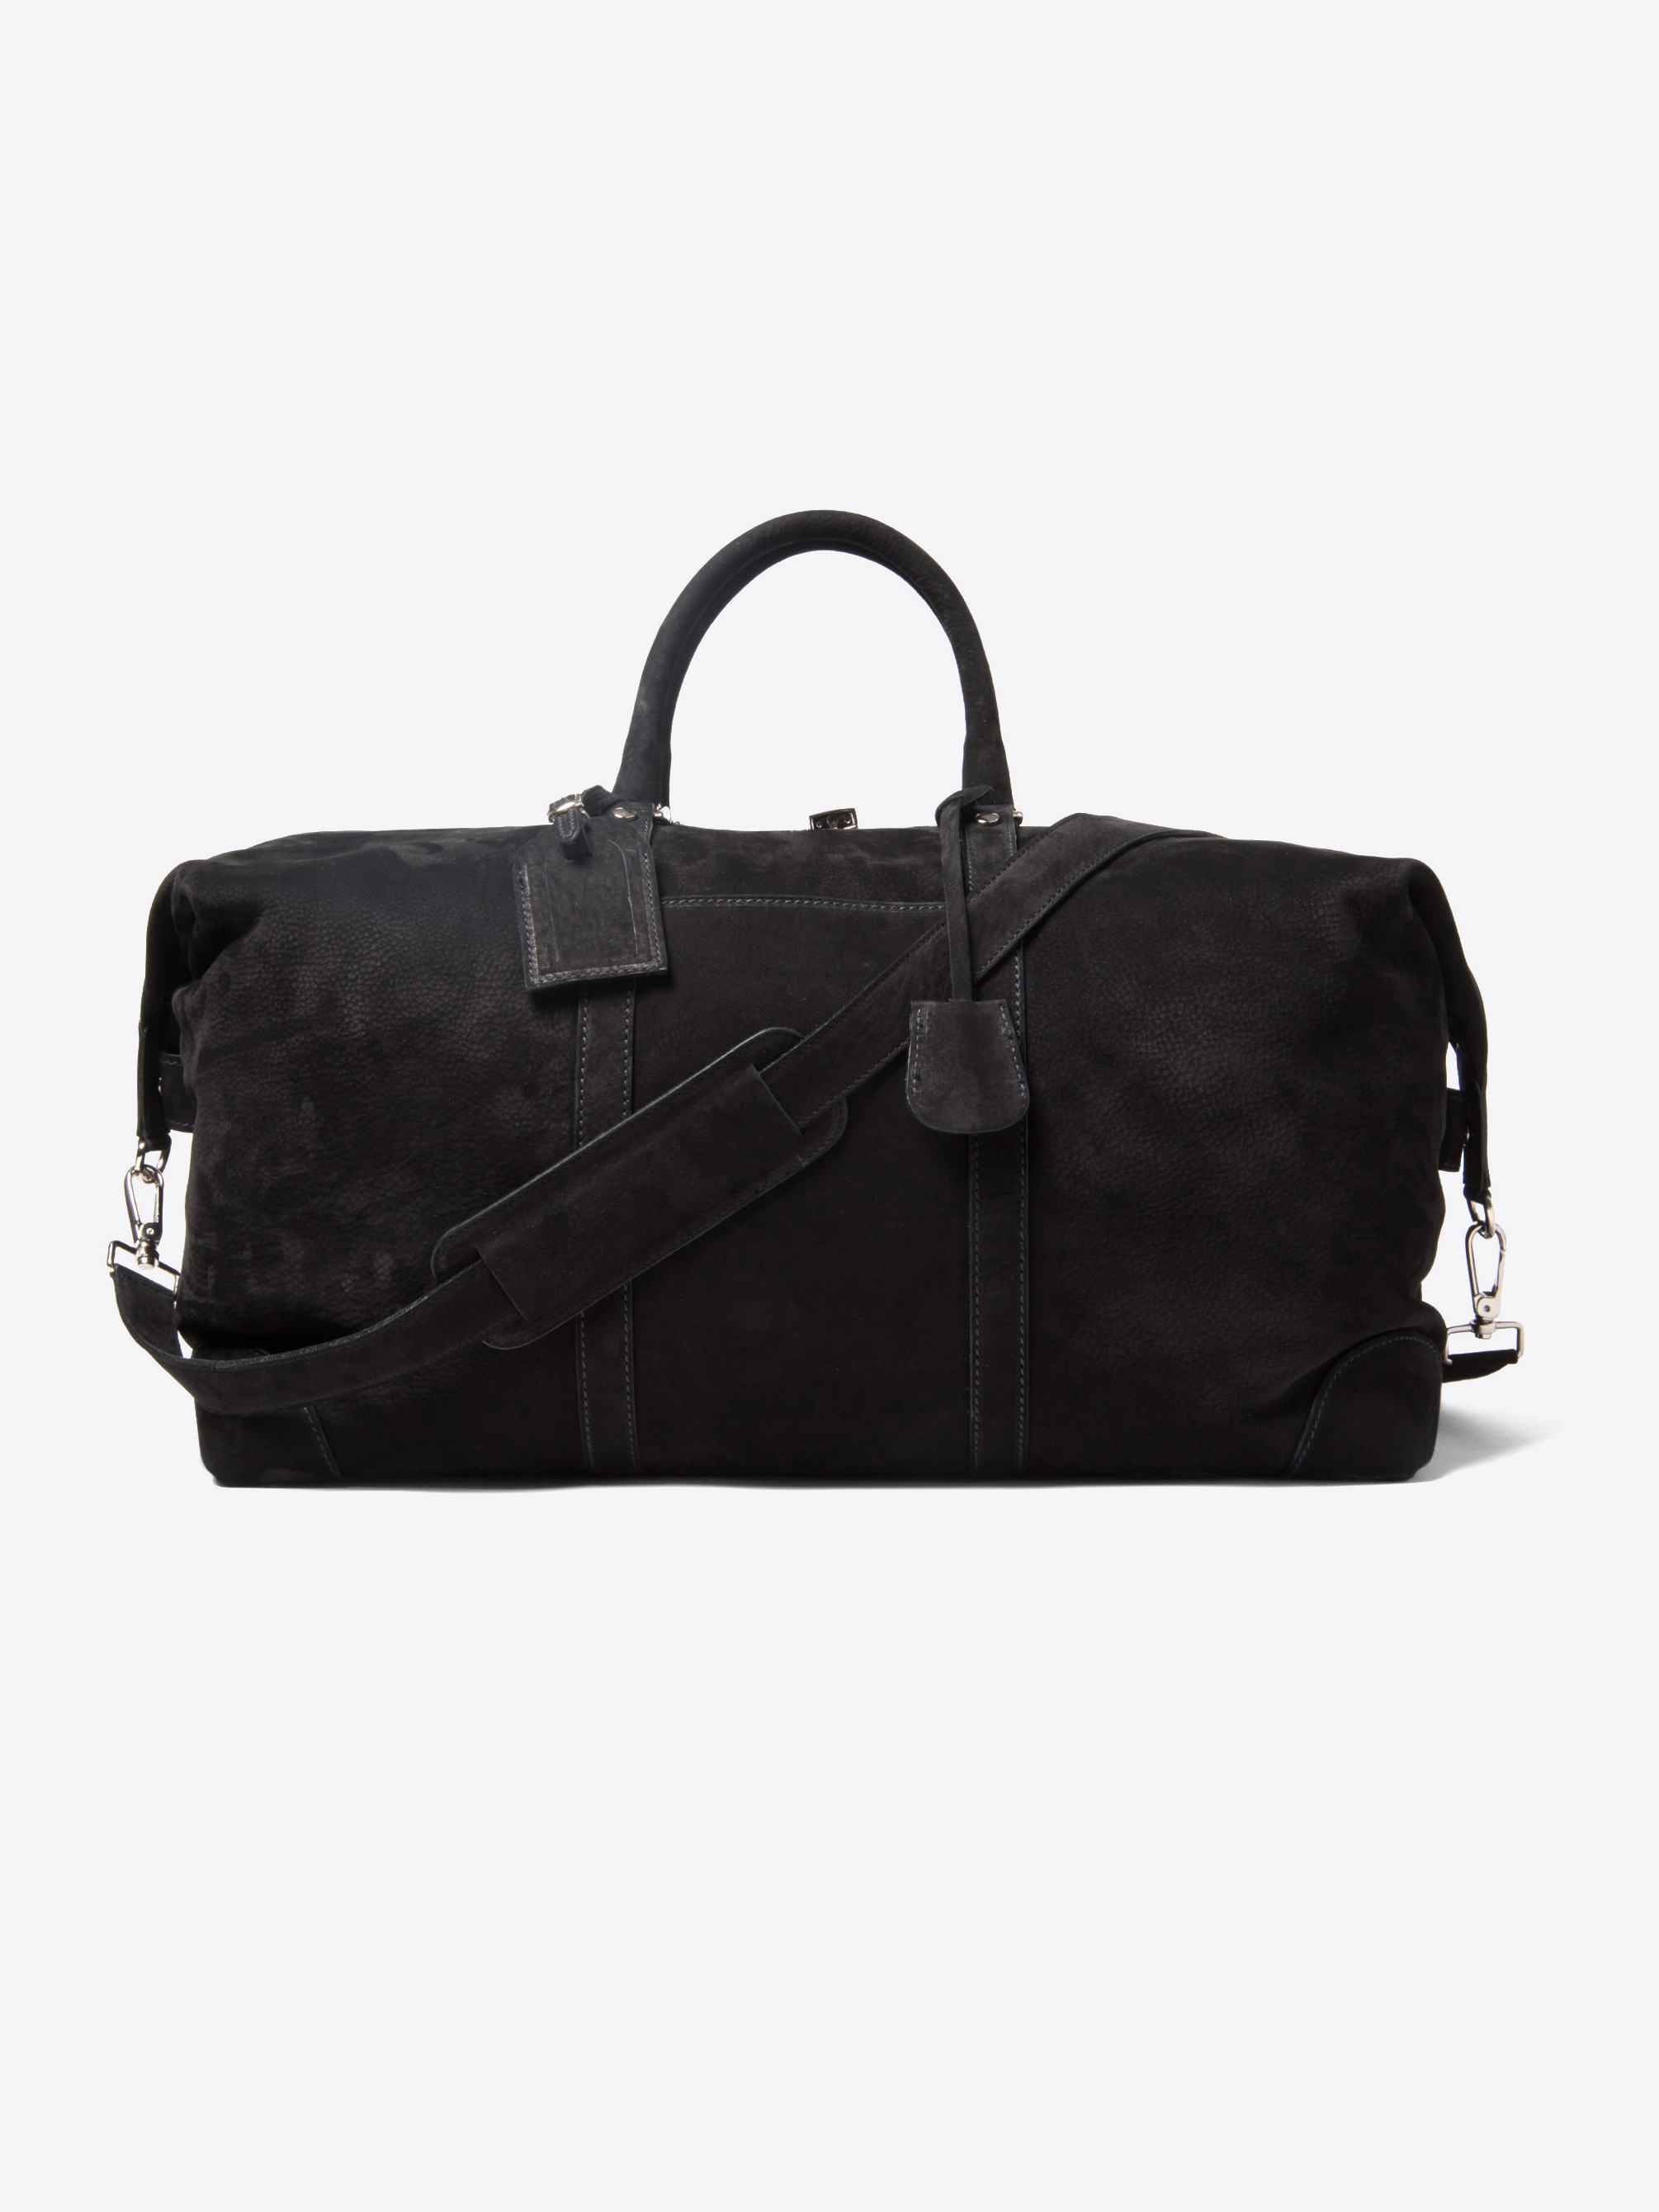 Zoom Image of Italian Black Nubuck Duffle Bag